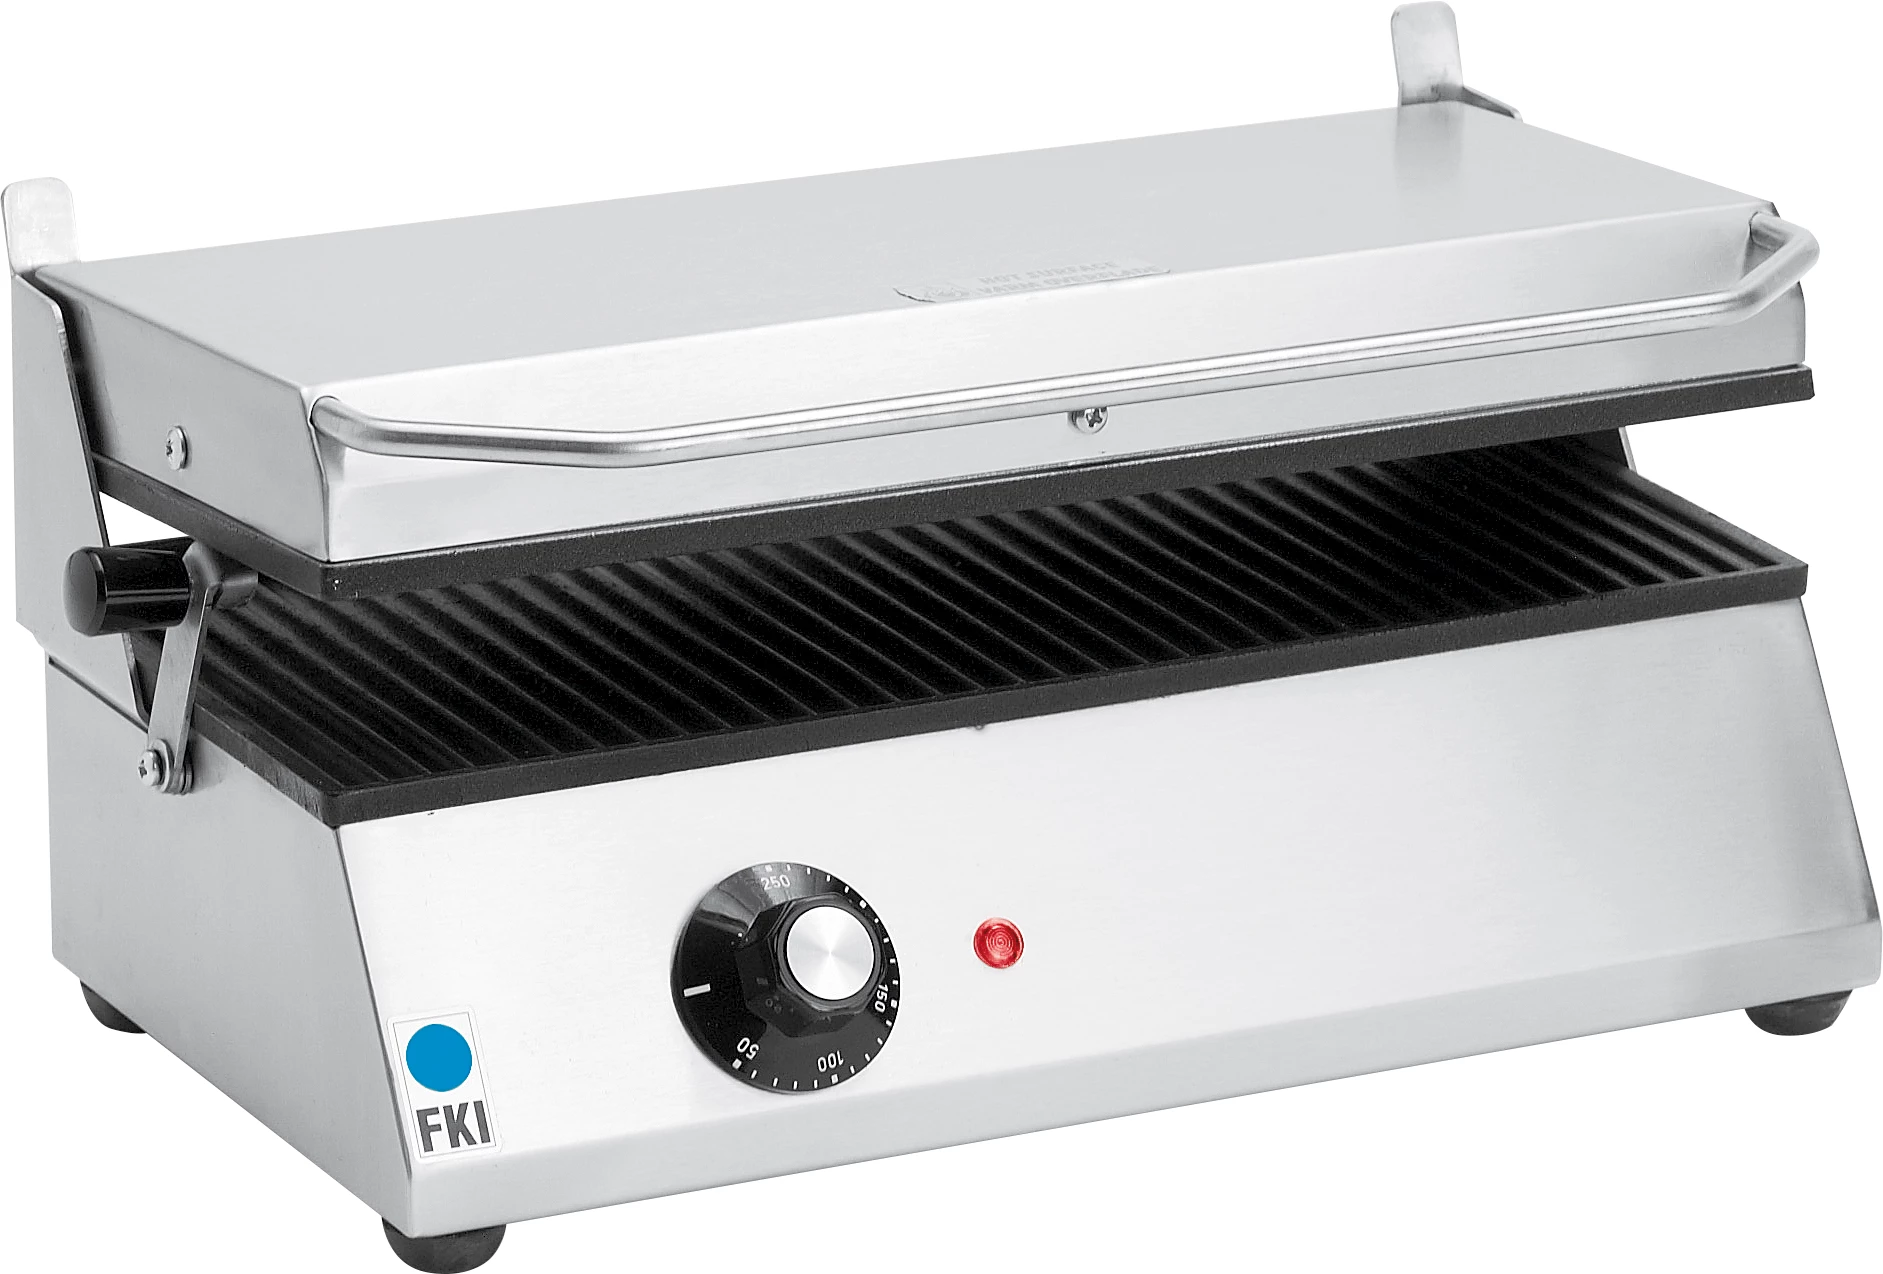 FKI TL5602 toaster